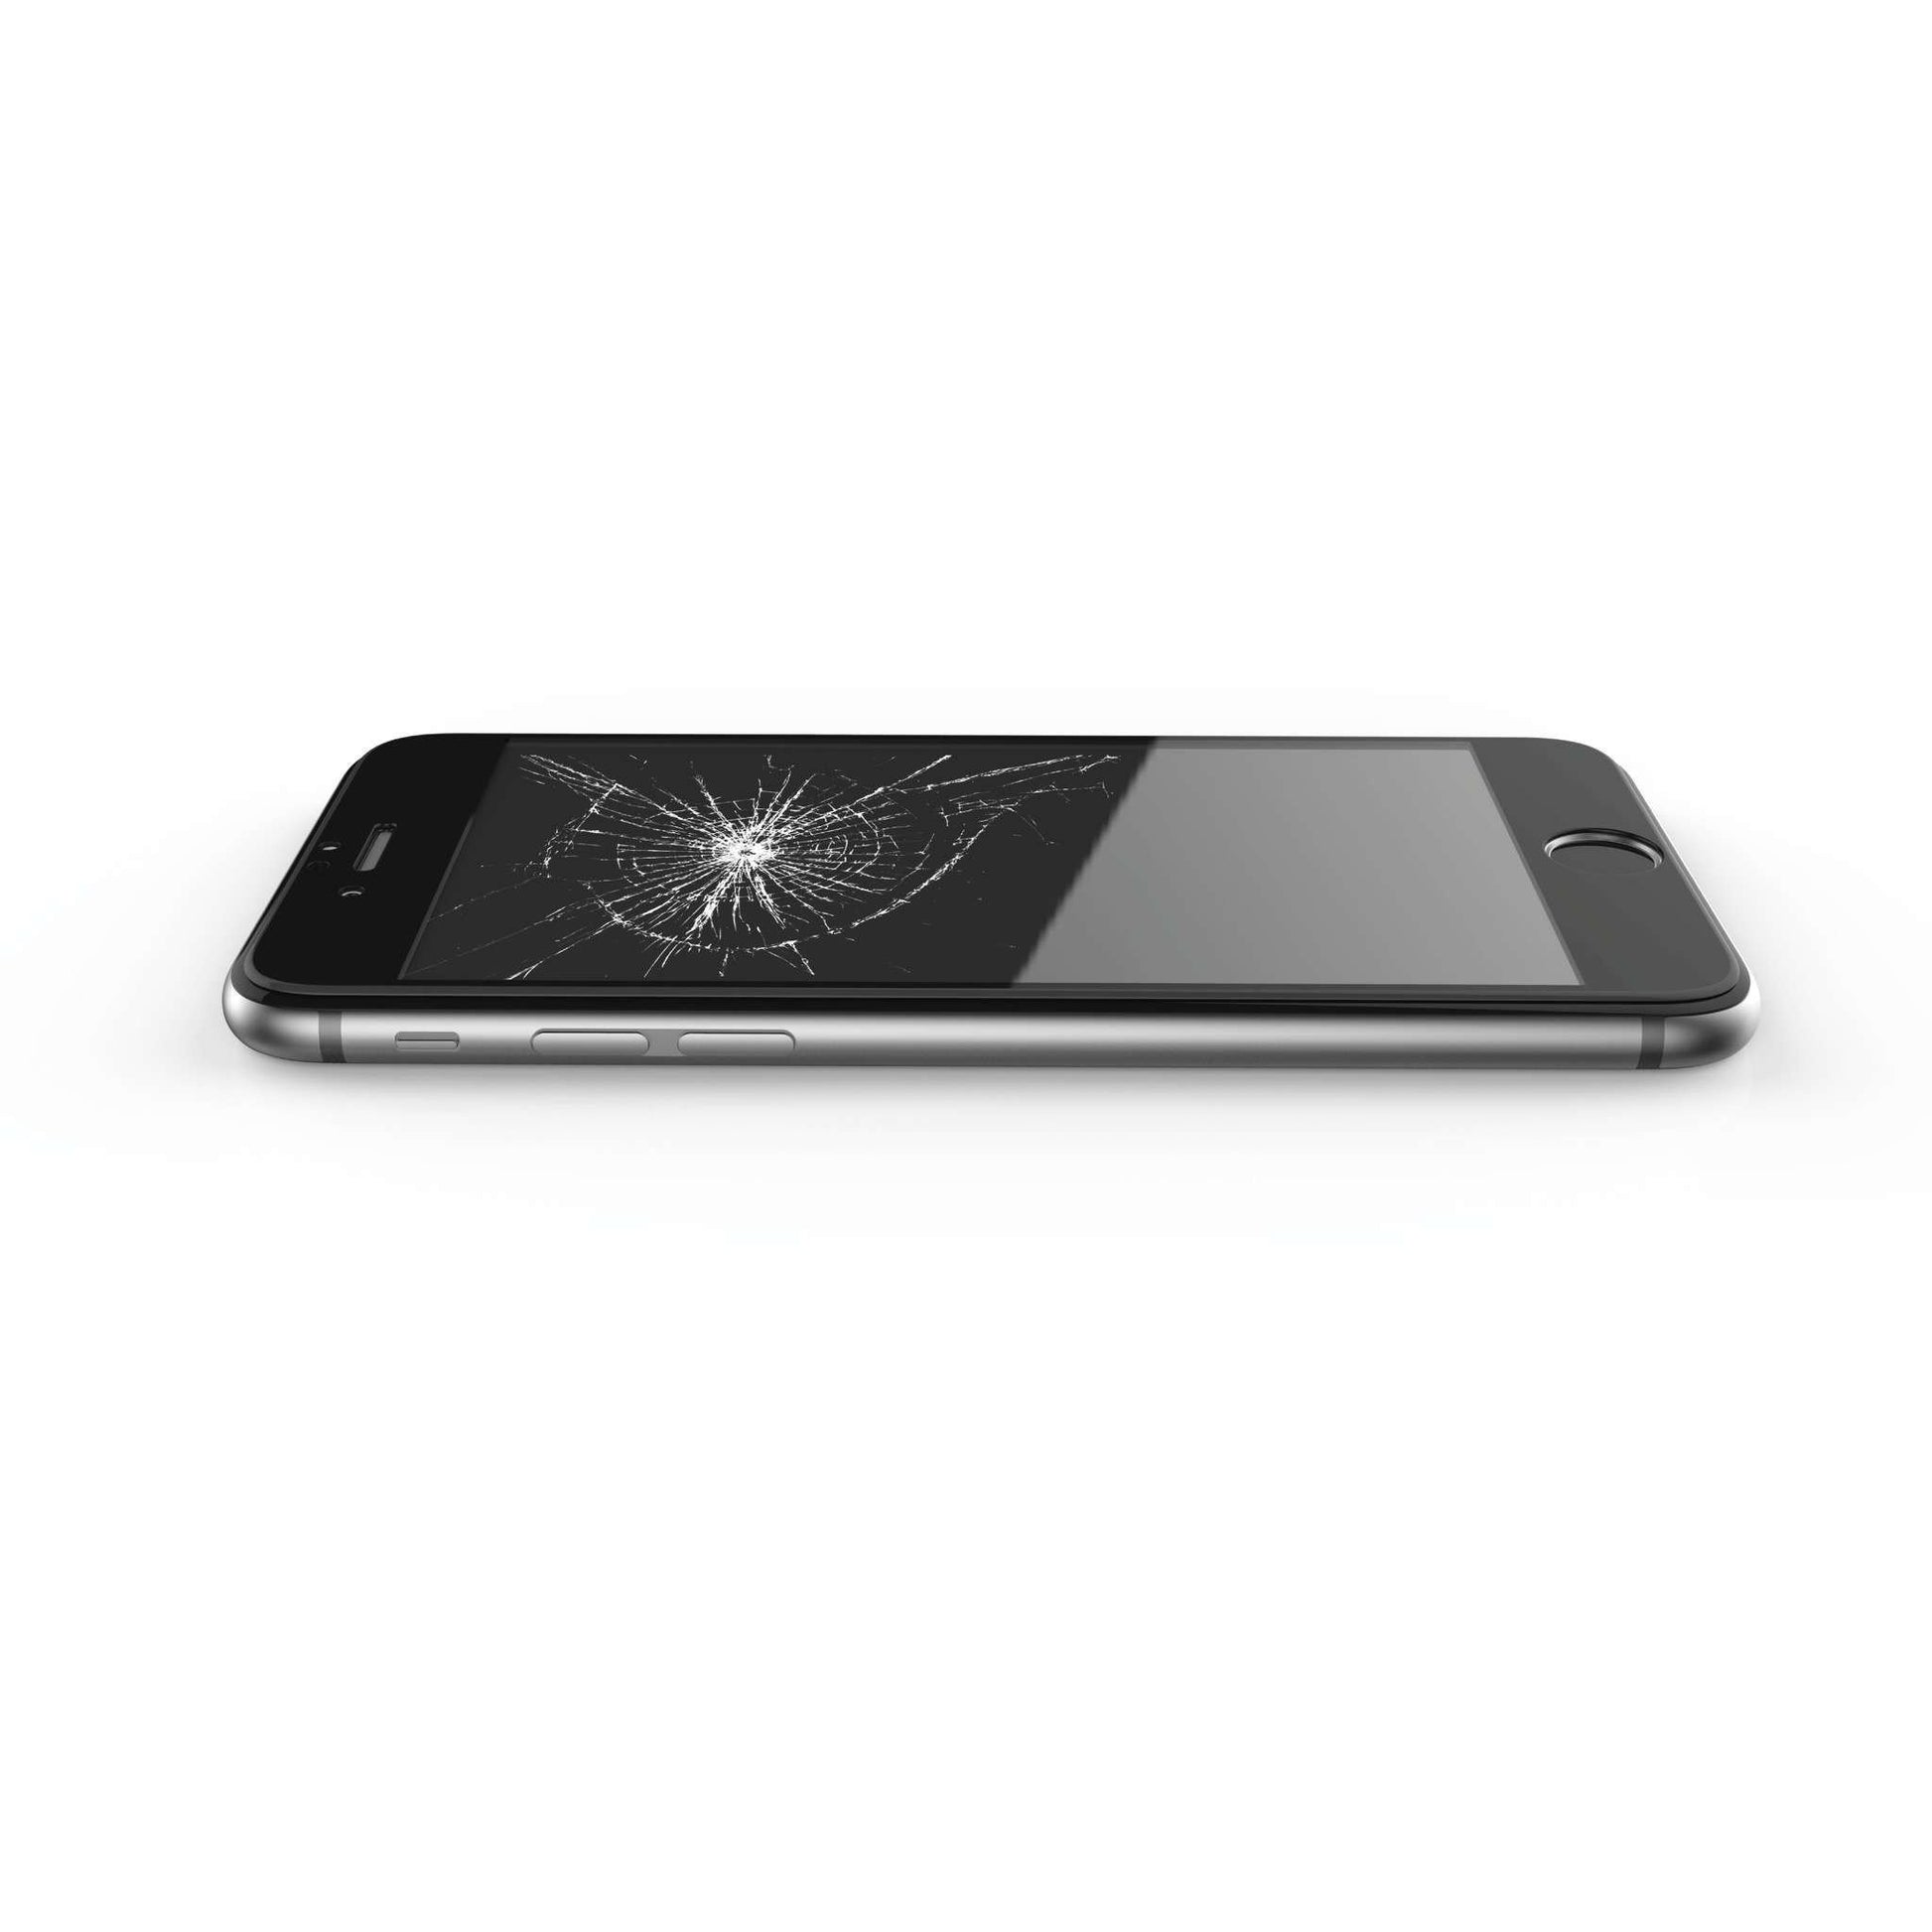 MoArmouz - iPhone 6S Plus/6 Plus Full Cover Tempered Glass